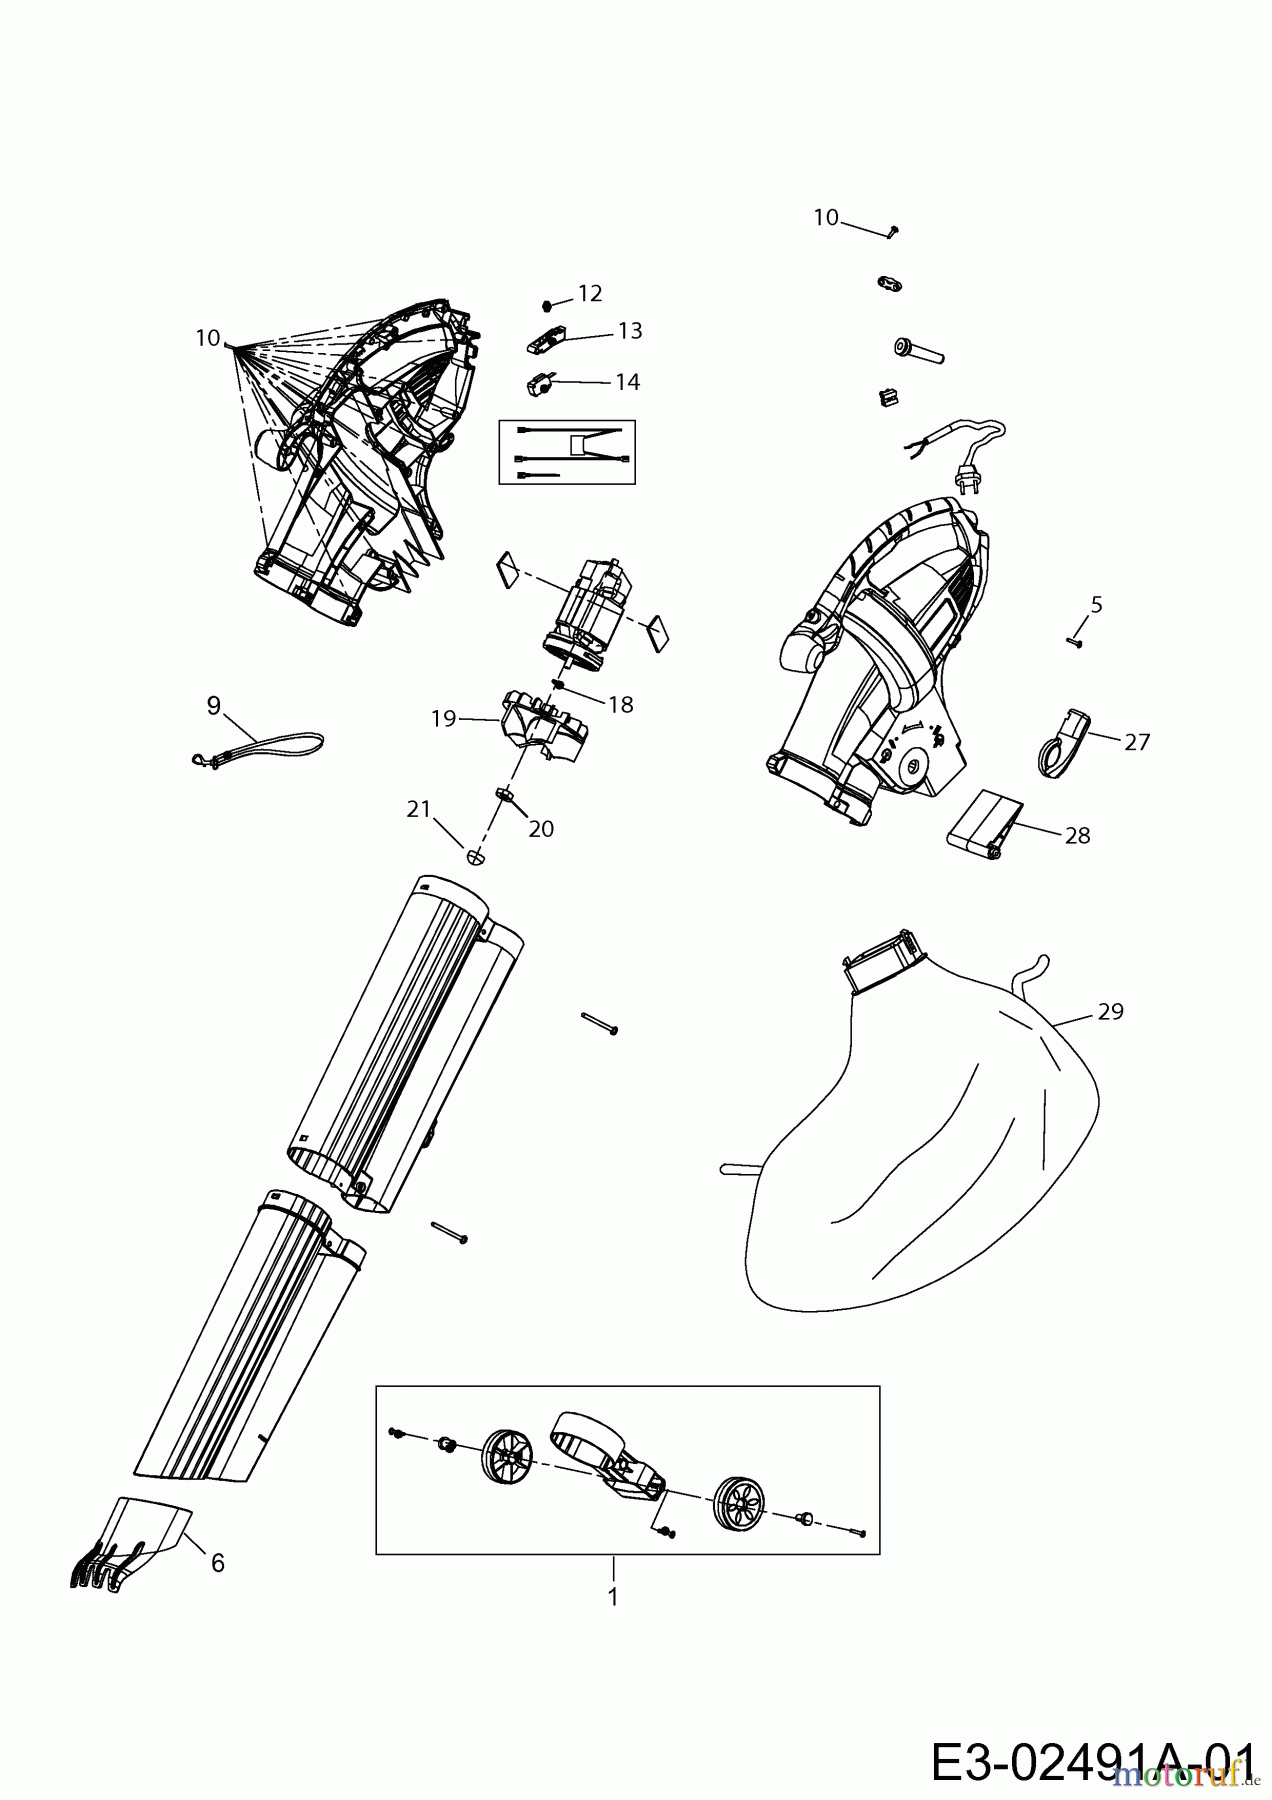  Wolf-Garten Leaf blower, Blower vac LBV 2600 E 41AB0BE7C50 (2022) Basic machine